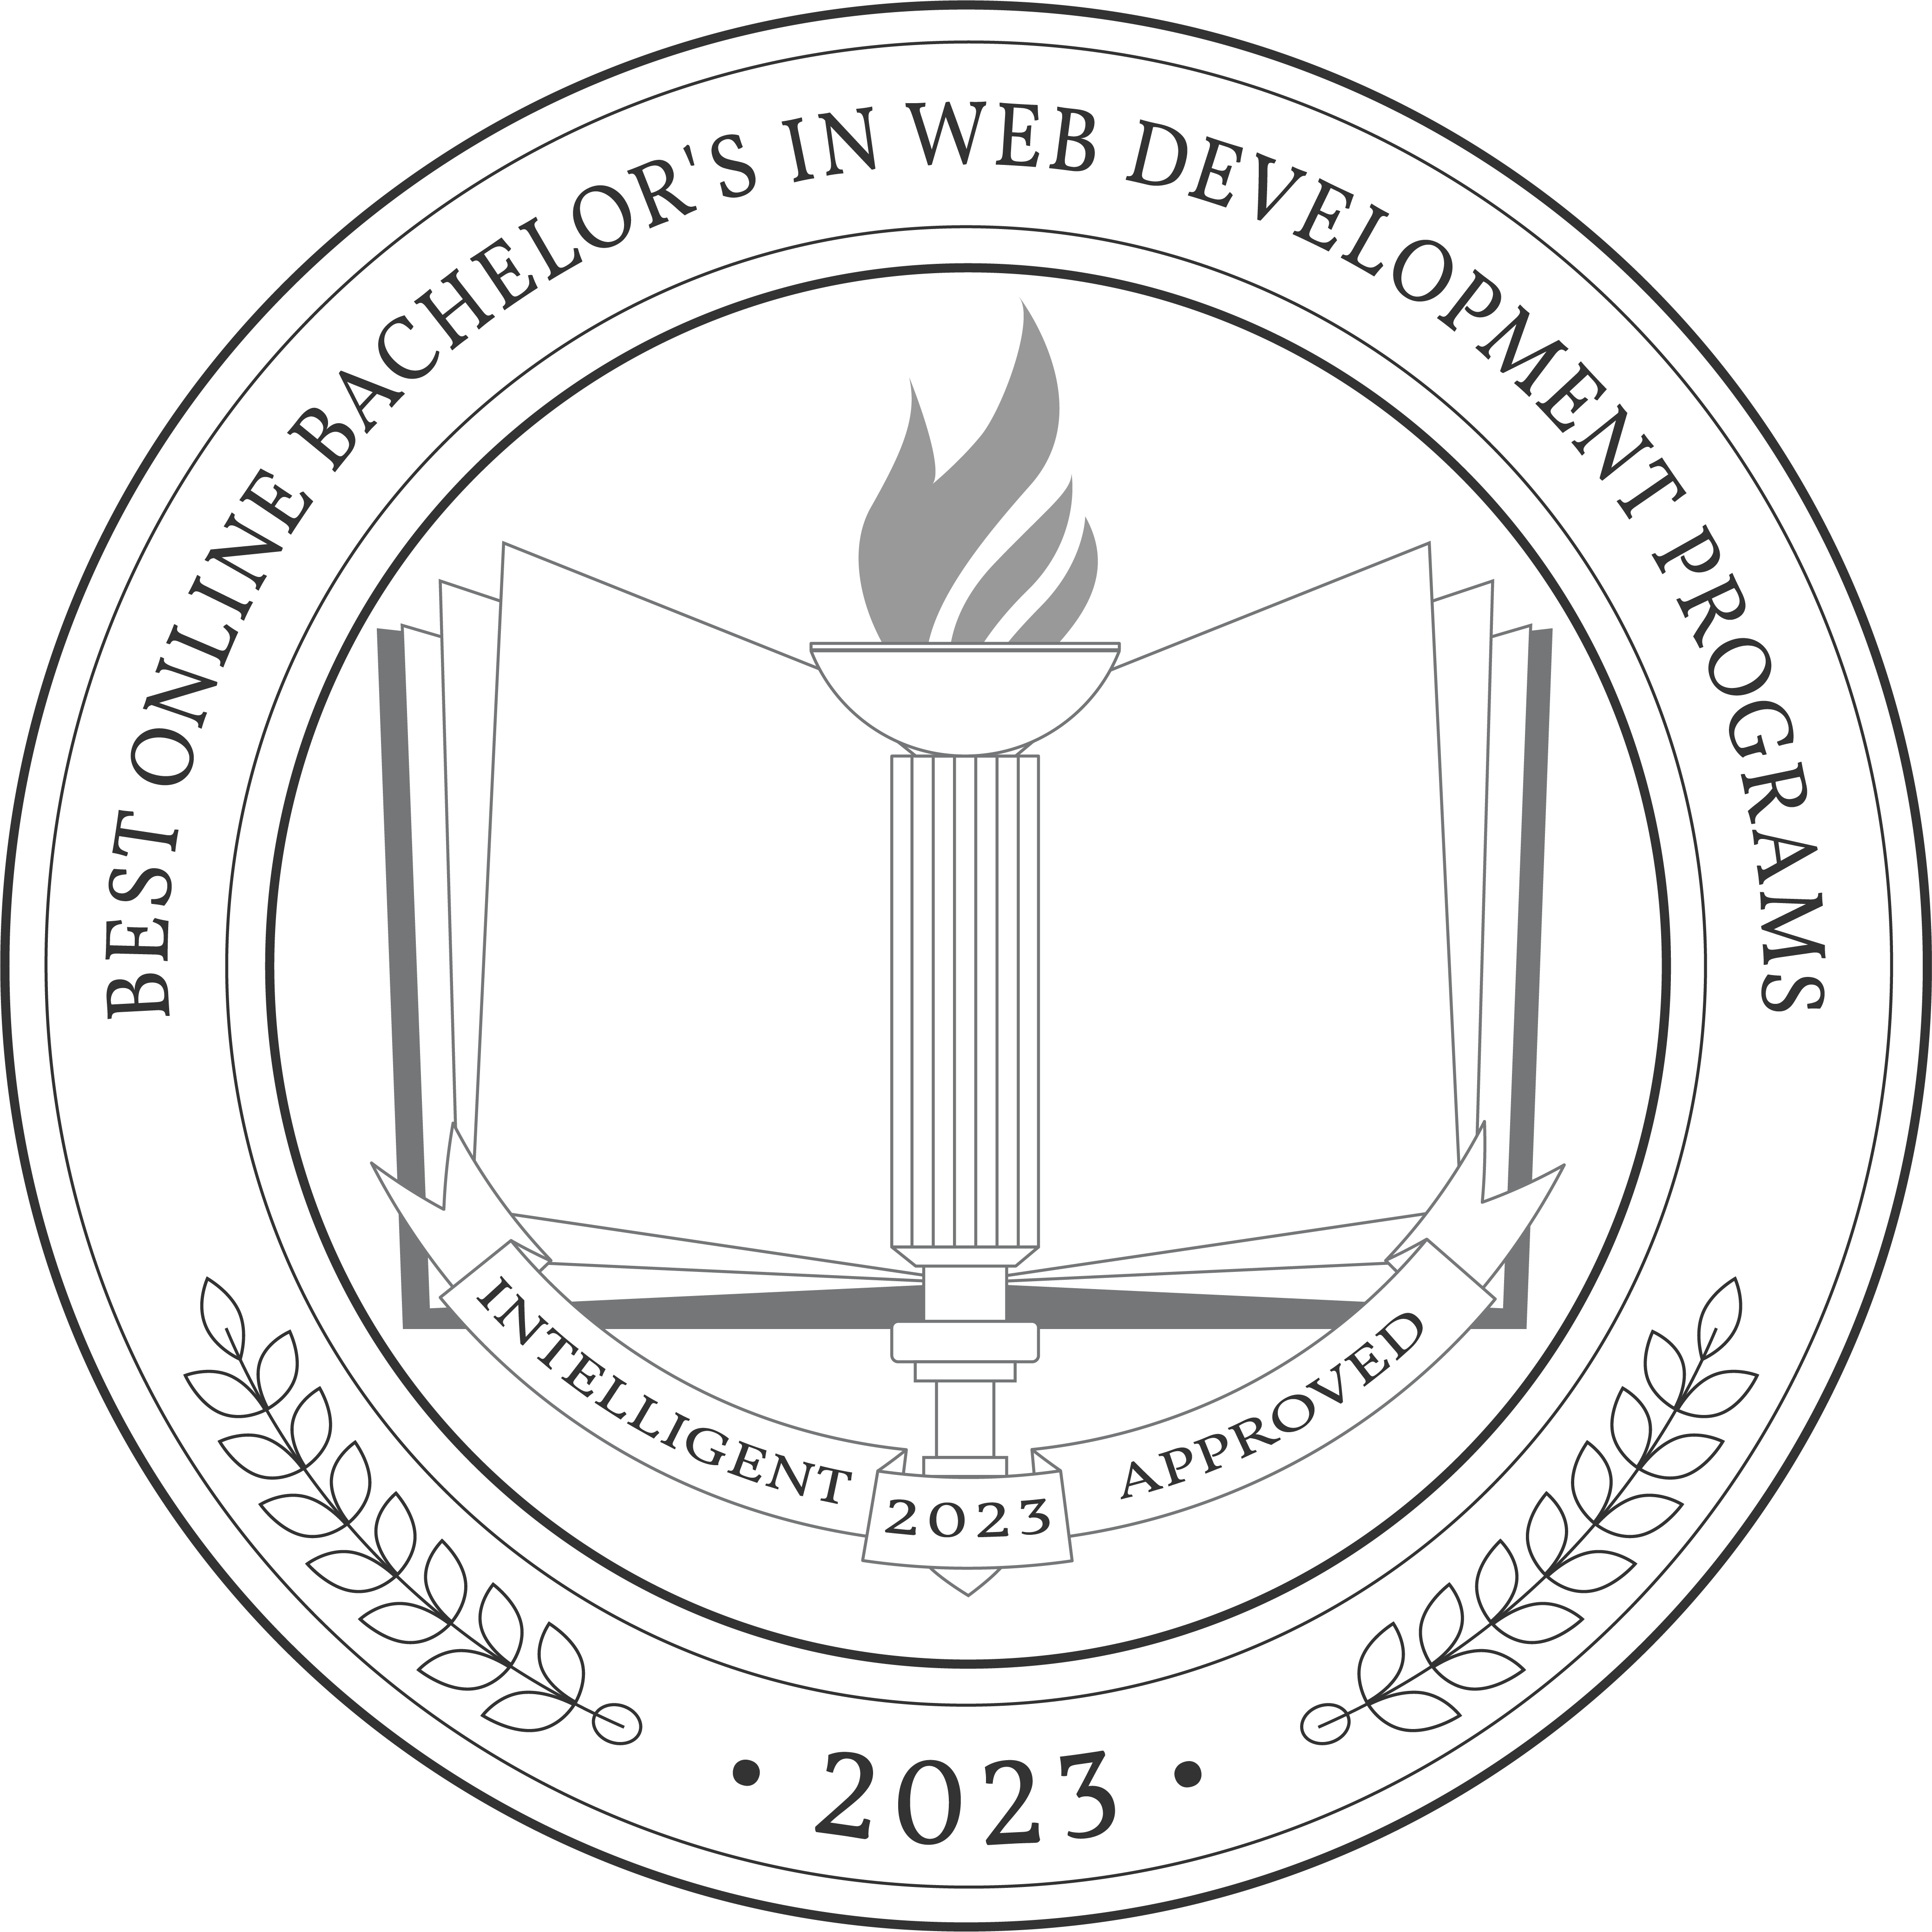 Best Online Bachelor's in Web Development Programs badge